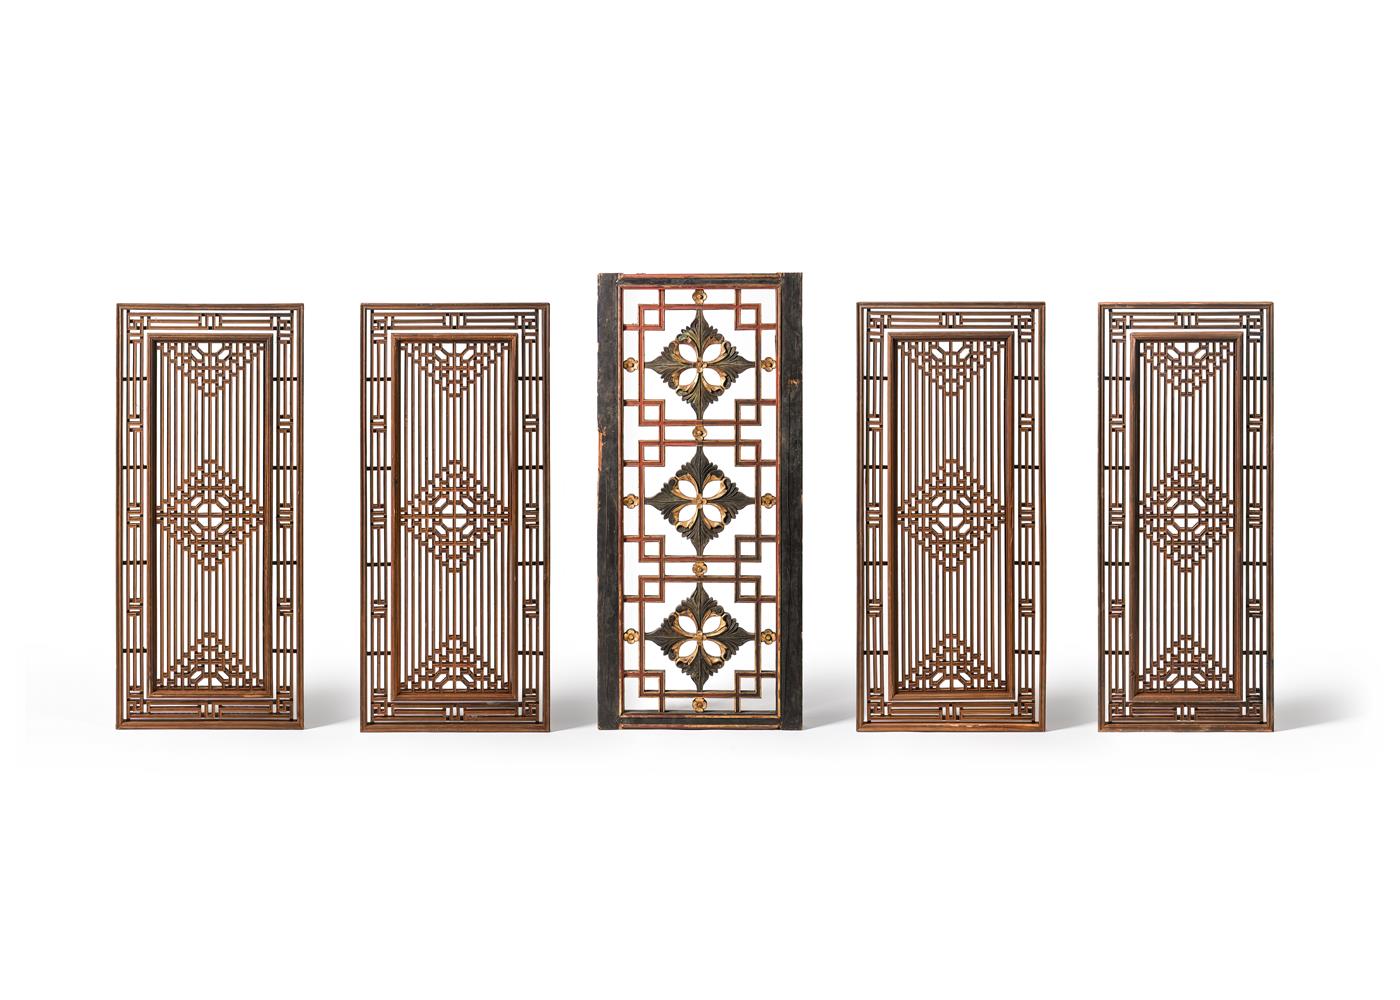 Four Chinese lattice wood windows